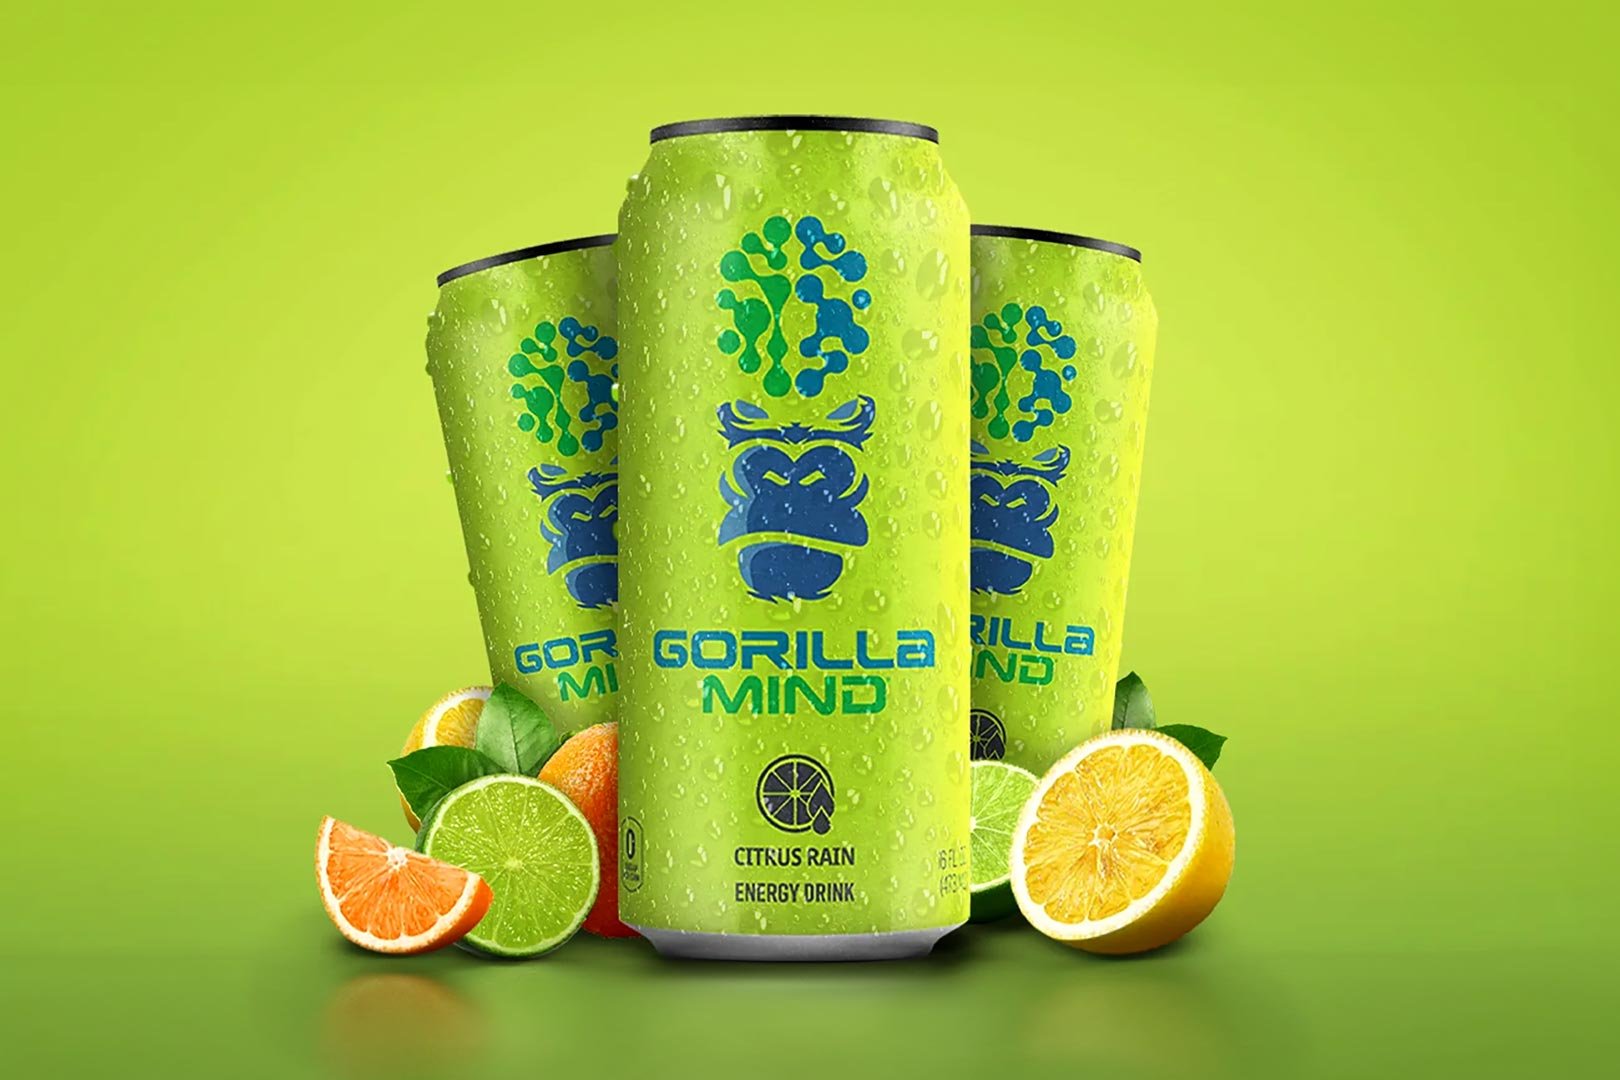 Where To Buy Citrus Rain Gorilla Mind Energy Drink